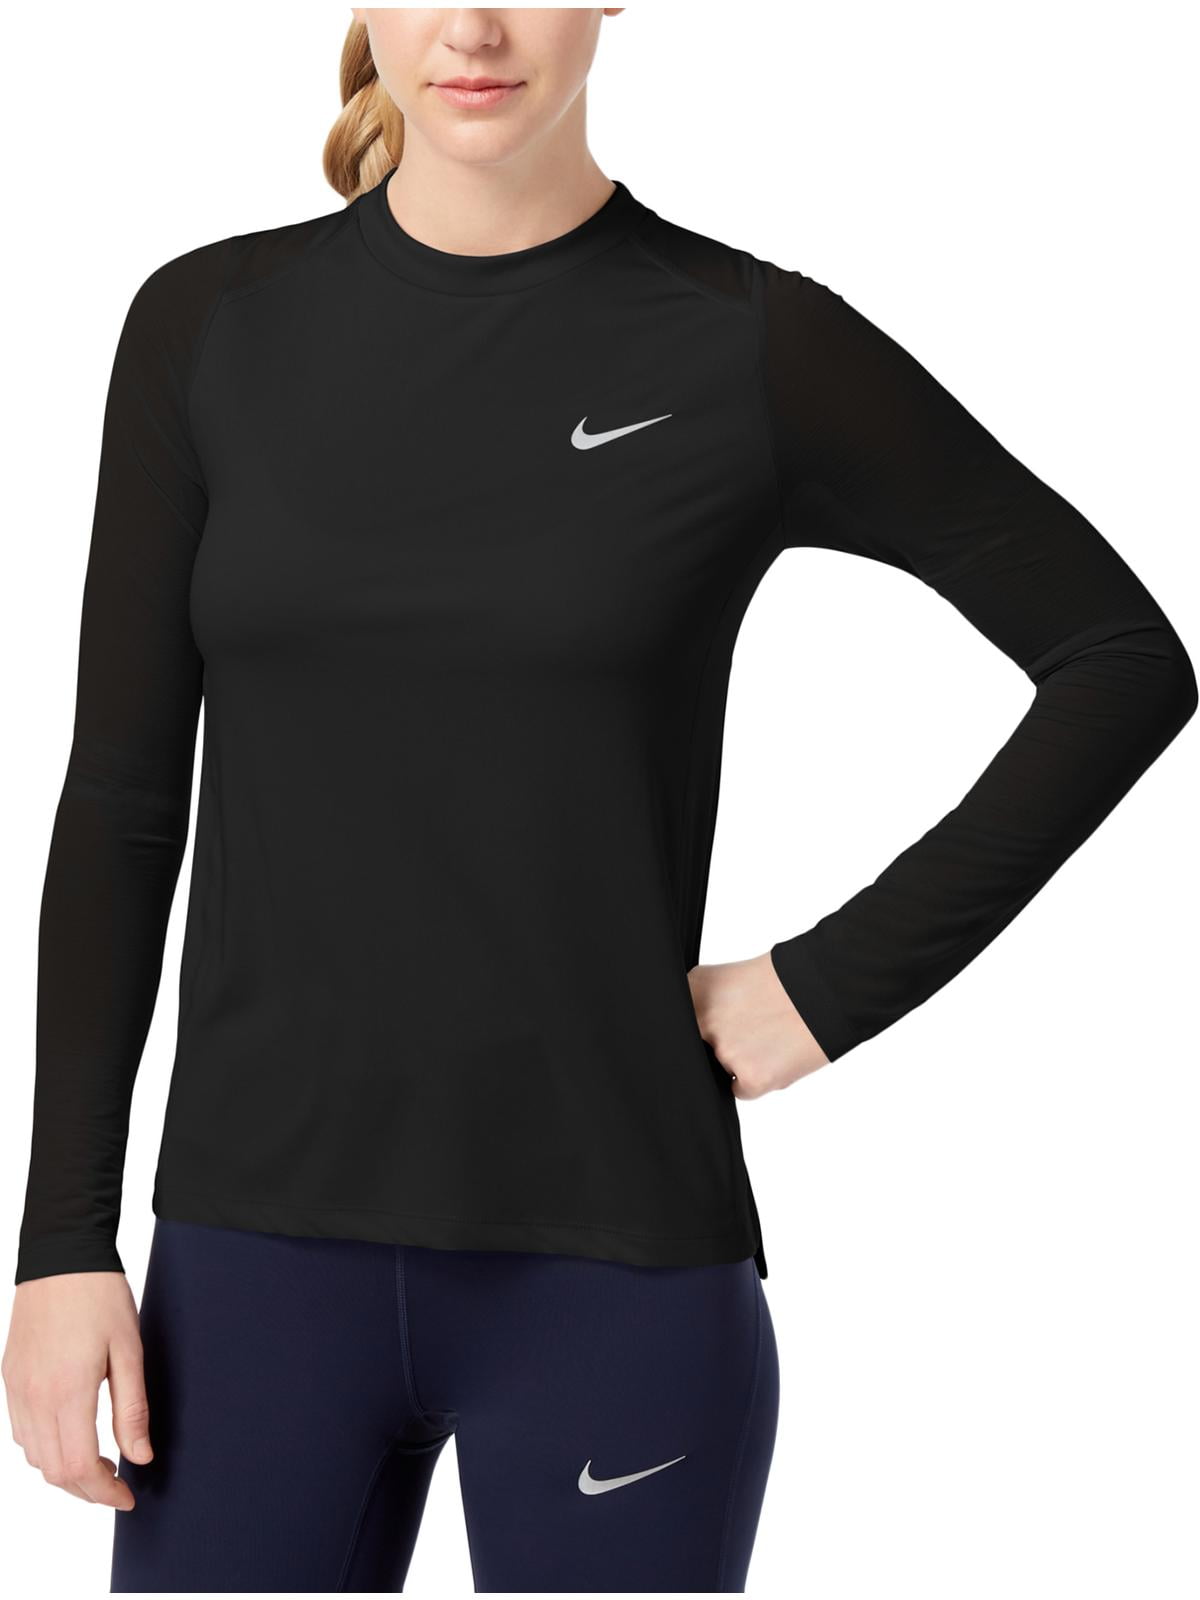 Nike - Nike Womens Fitness Yoga T-Shirt - Walmart.com - Walmart.com